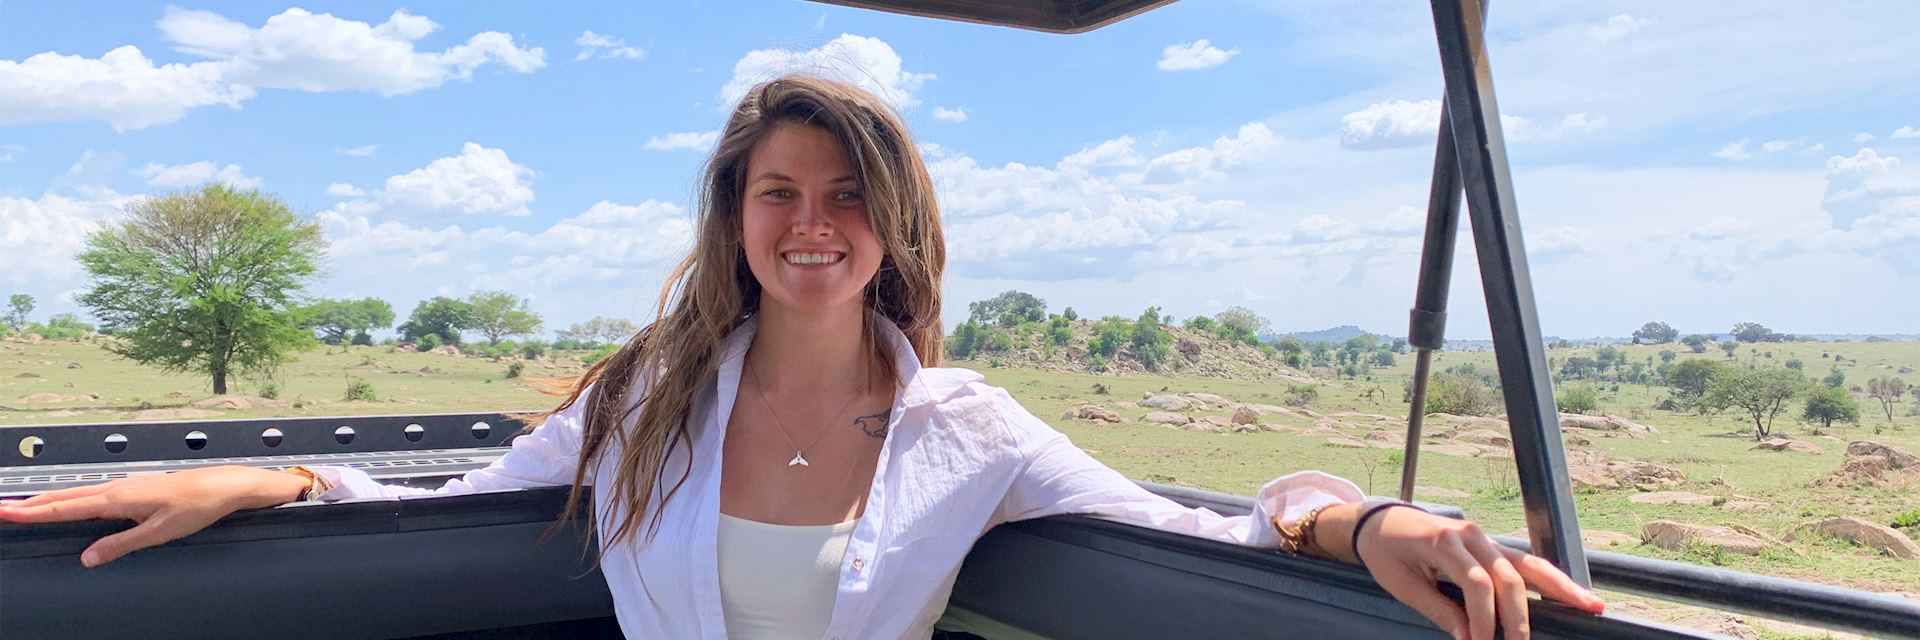 Lauren in Serengeti National Park, Tanzania